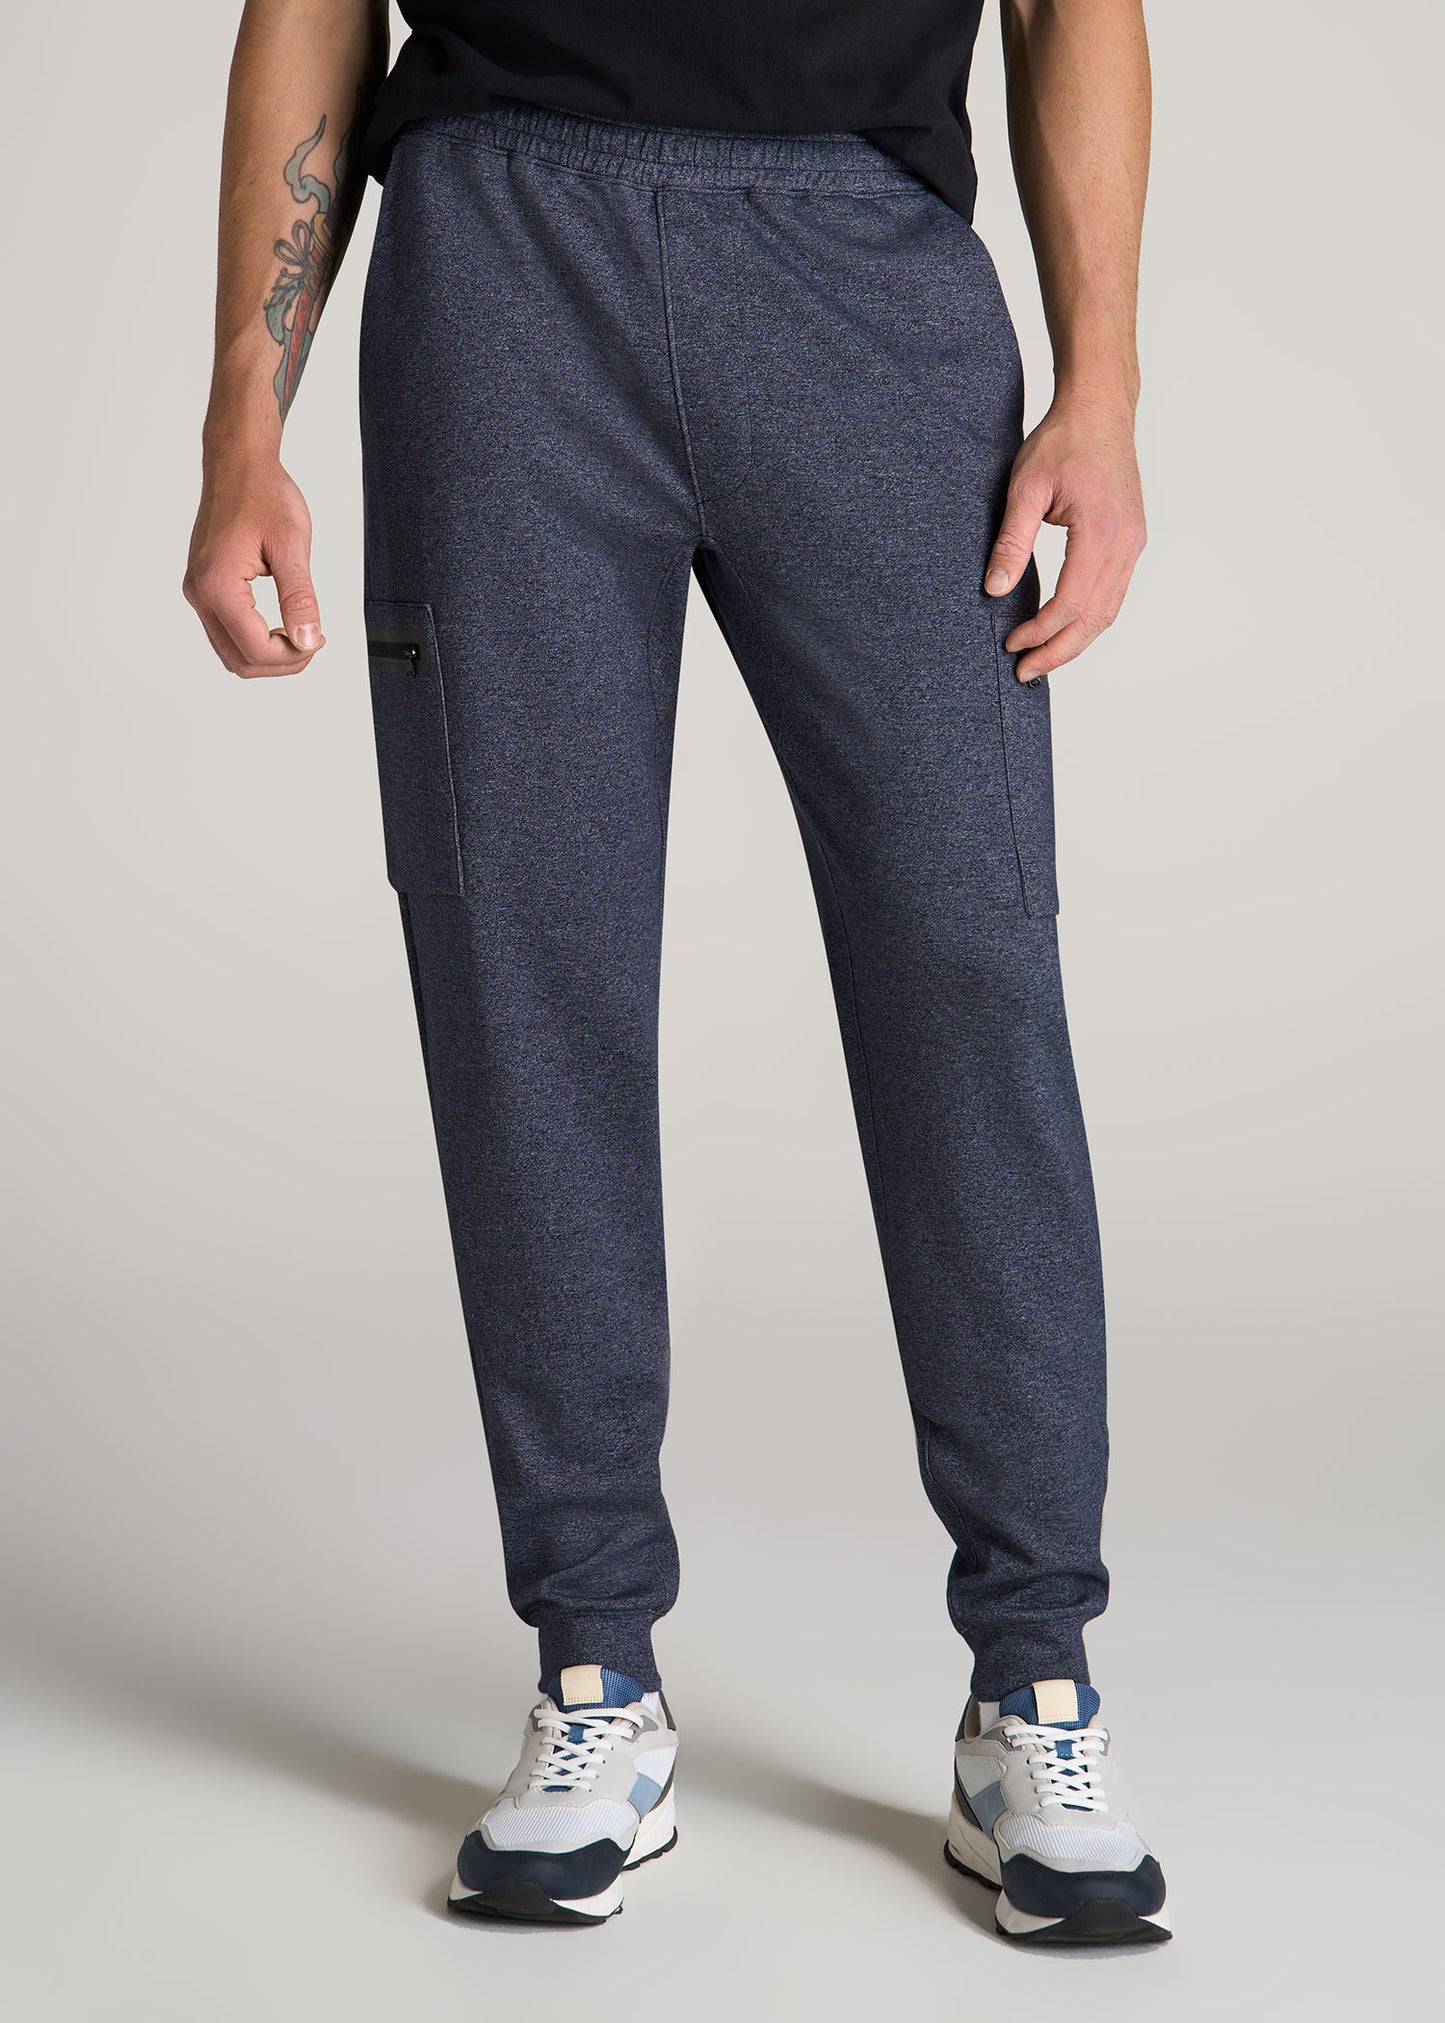 Check styling ideas for「Sweatpants、Fleece Full-Zip Jacket